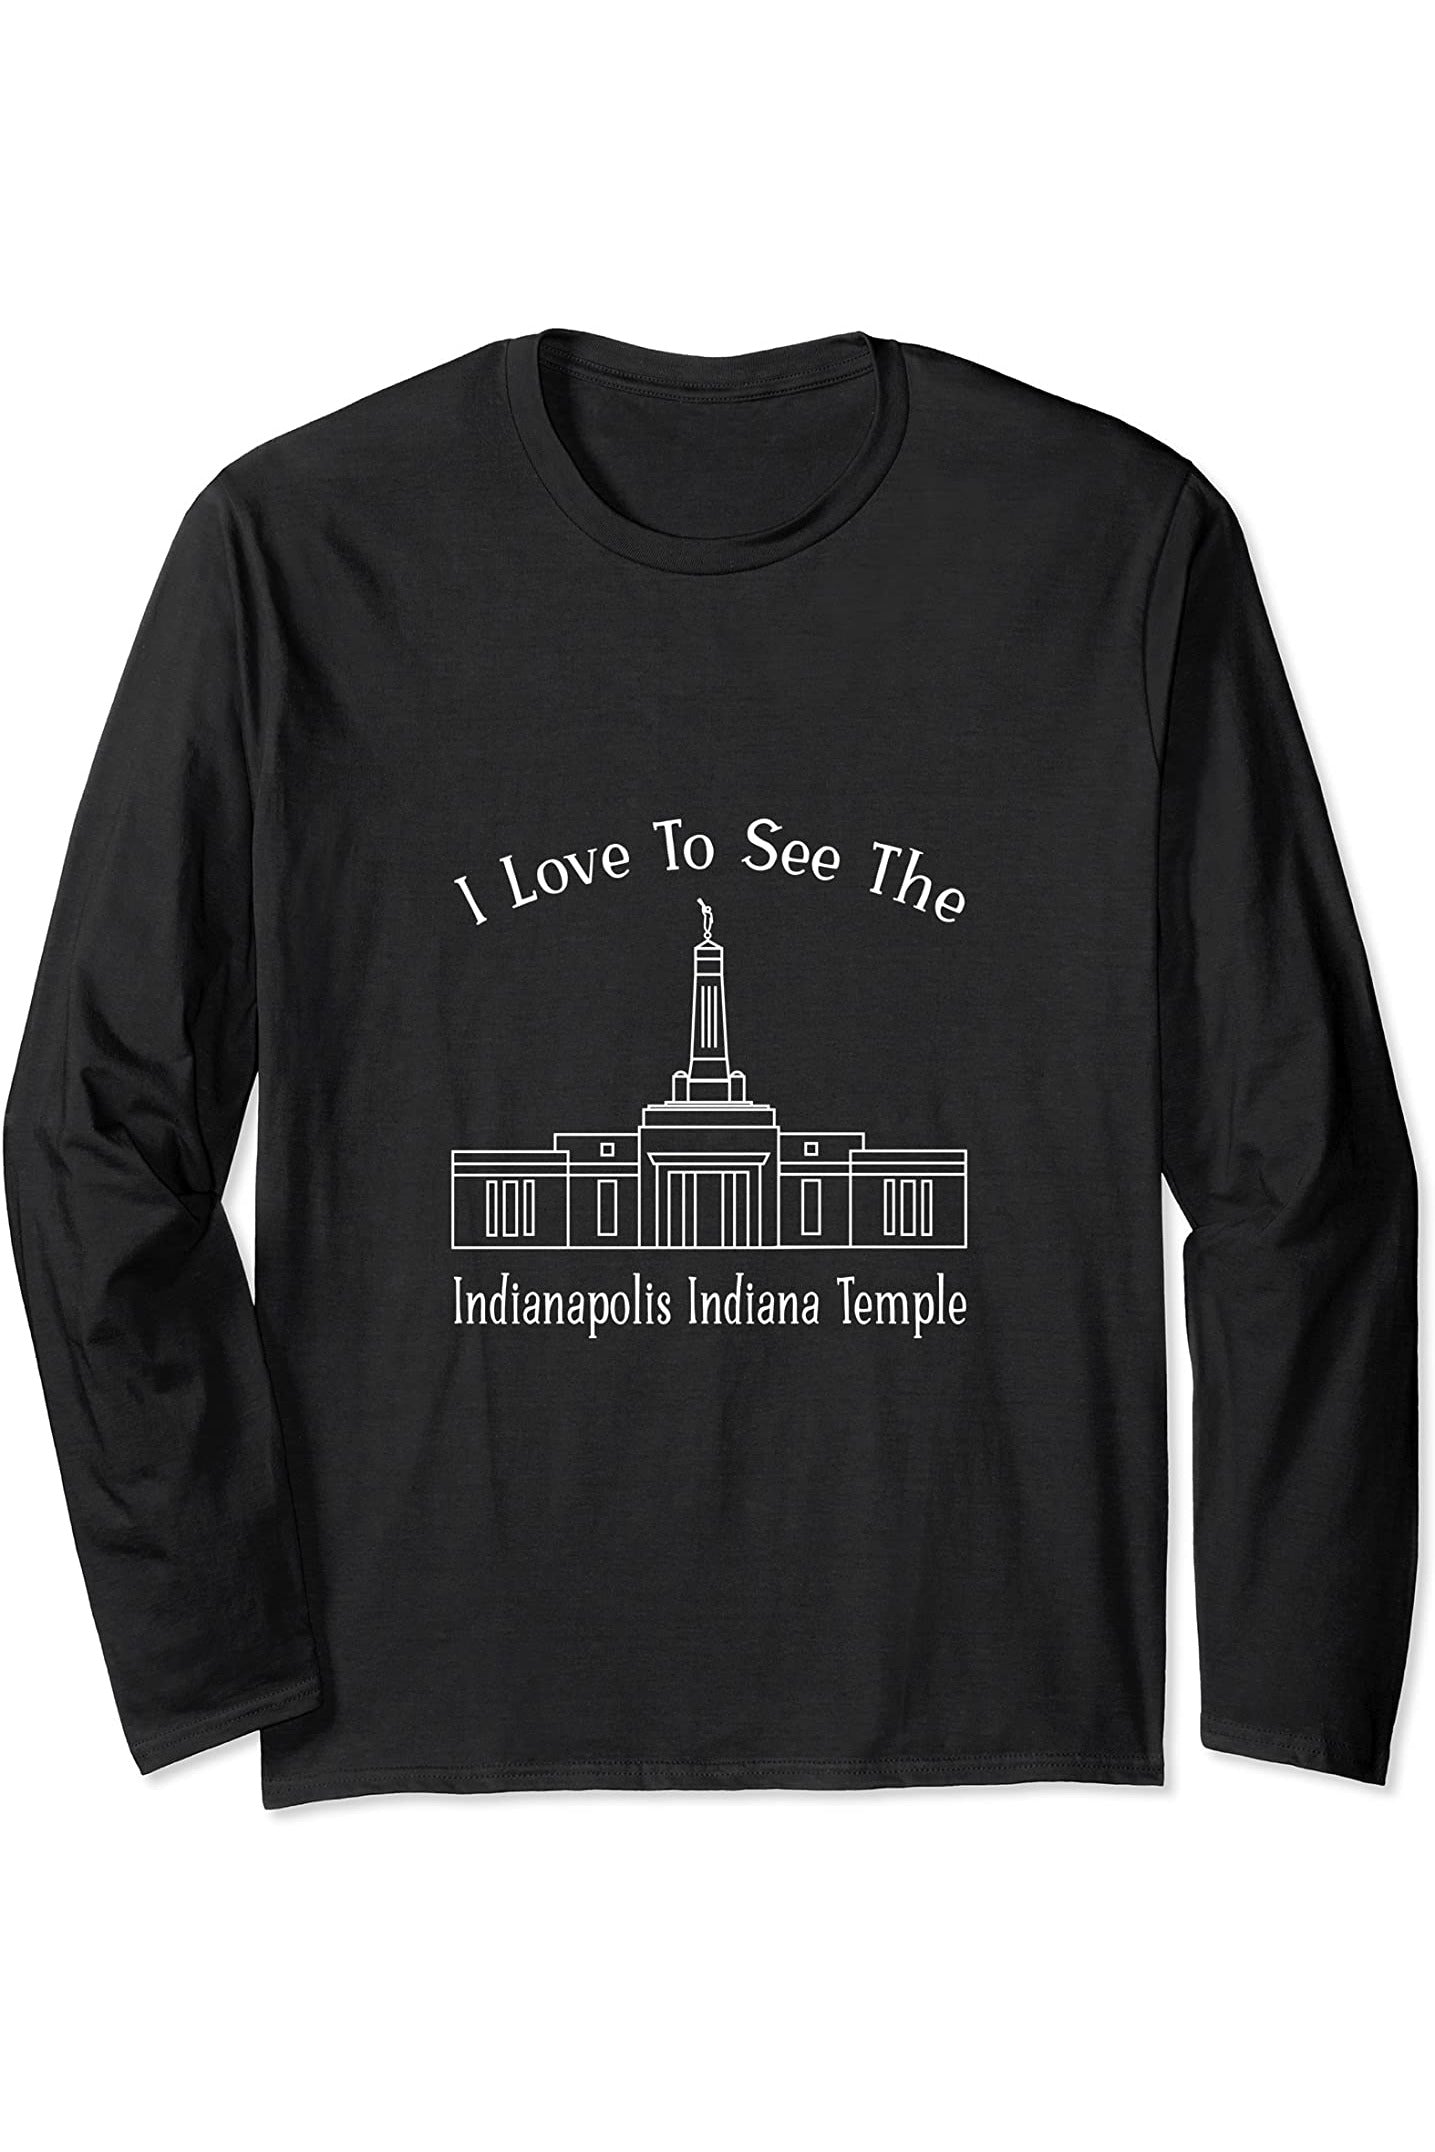 Indianapolis Indiana Temple Long Sleeve T-Shirt - Happy Style (English) US